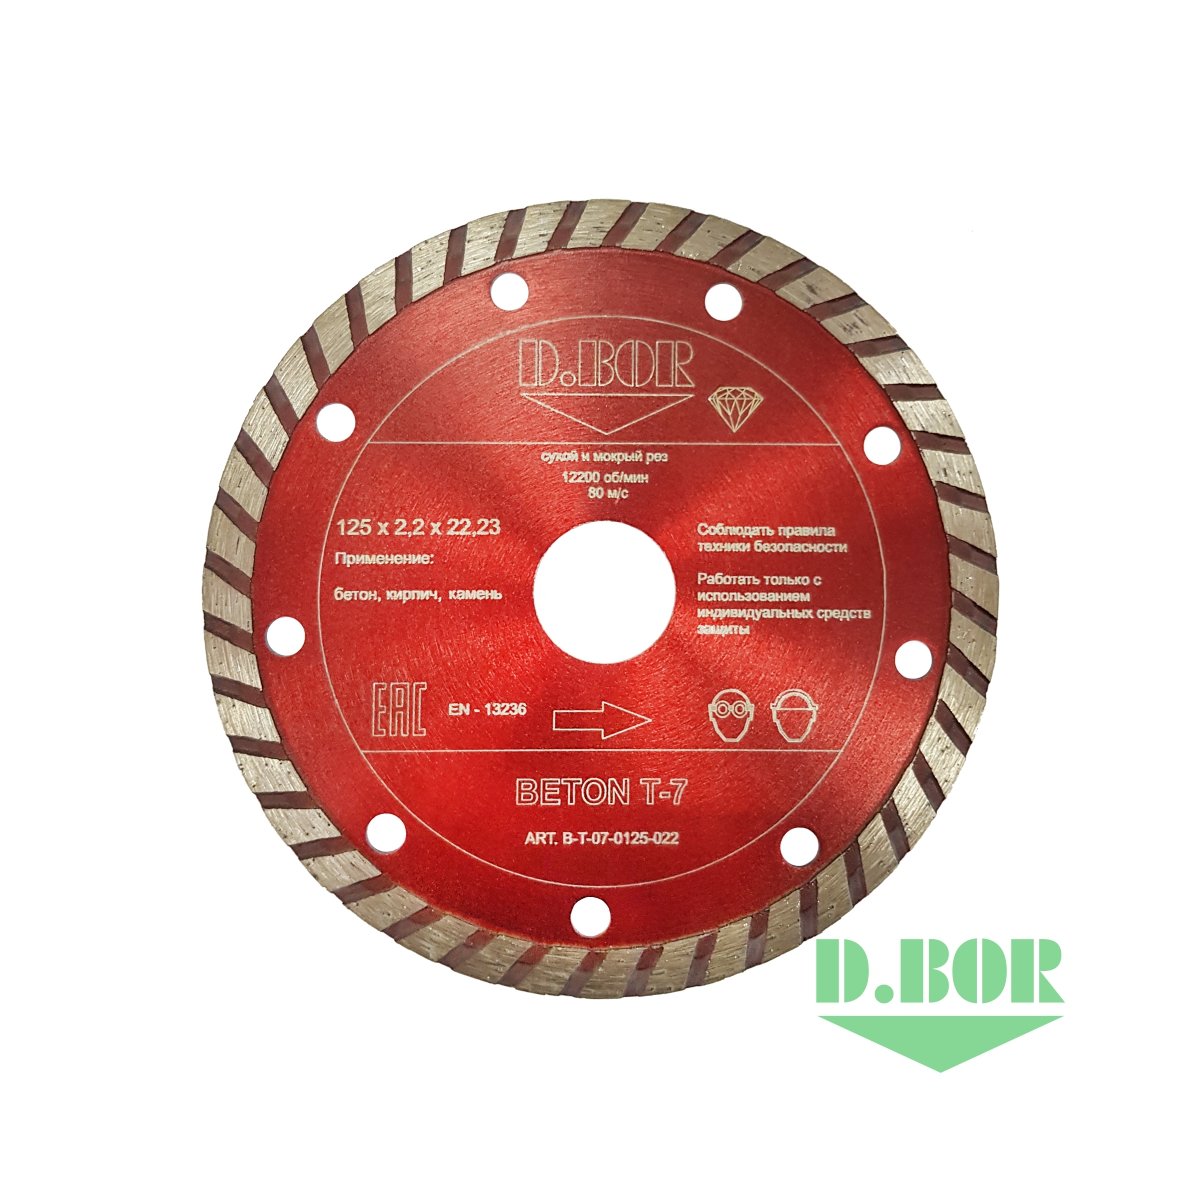 Алмазный диск BETON T-7, 125x2,2x22,23 (арт. B-T-07-0125-022) "D.BOR"